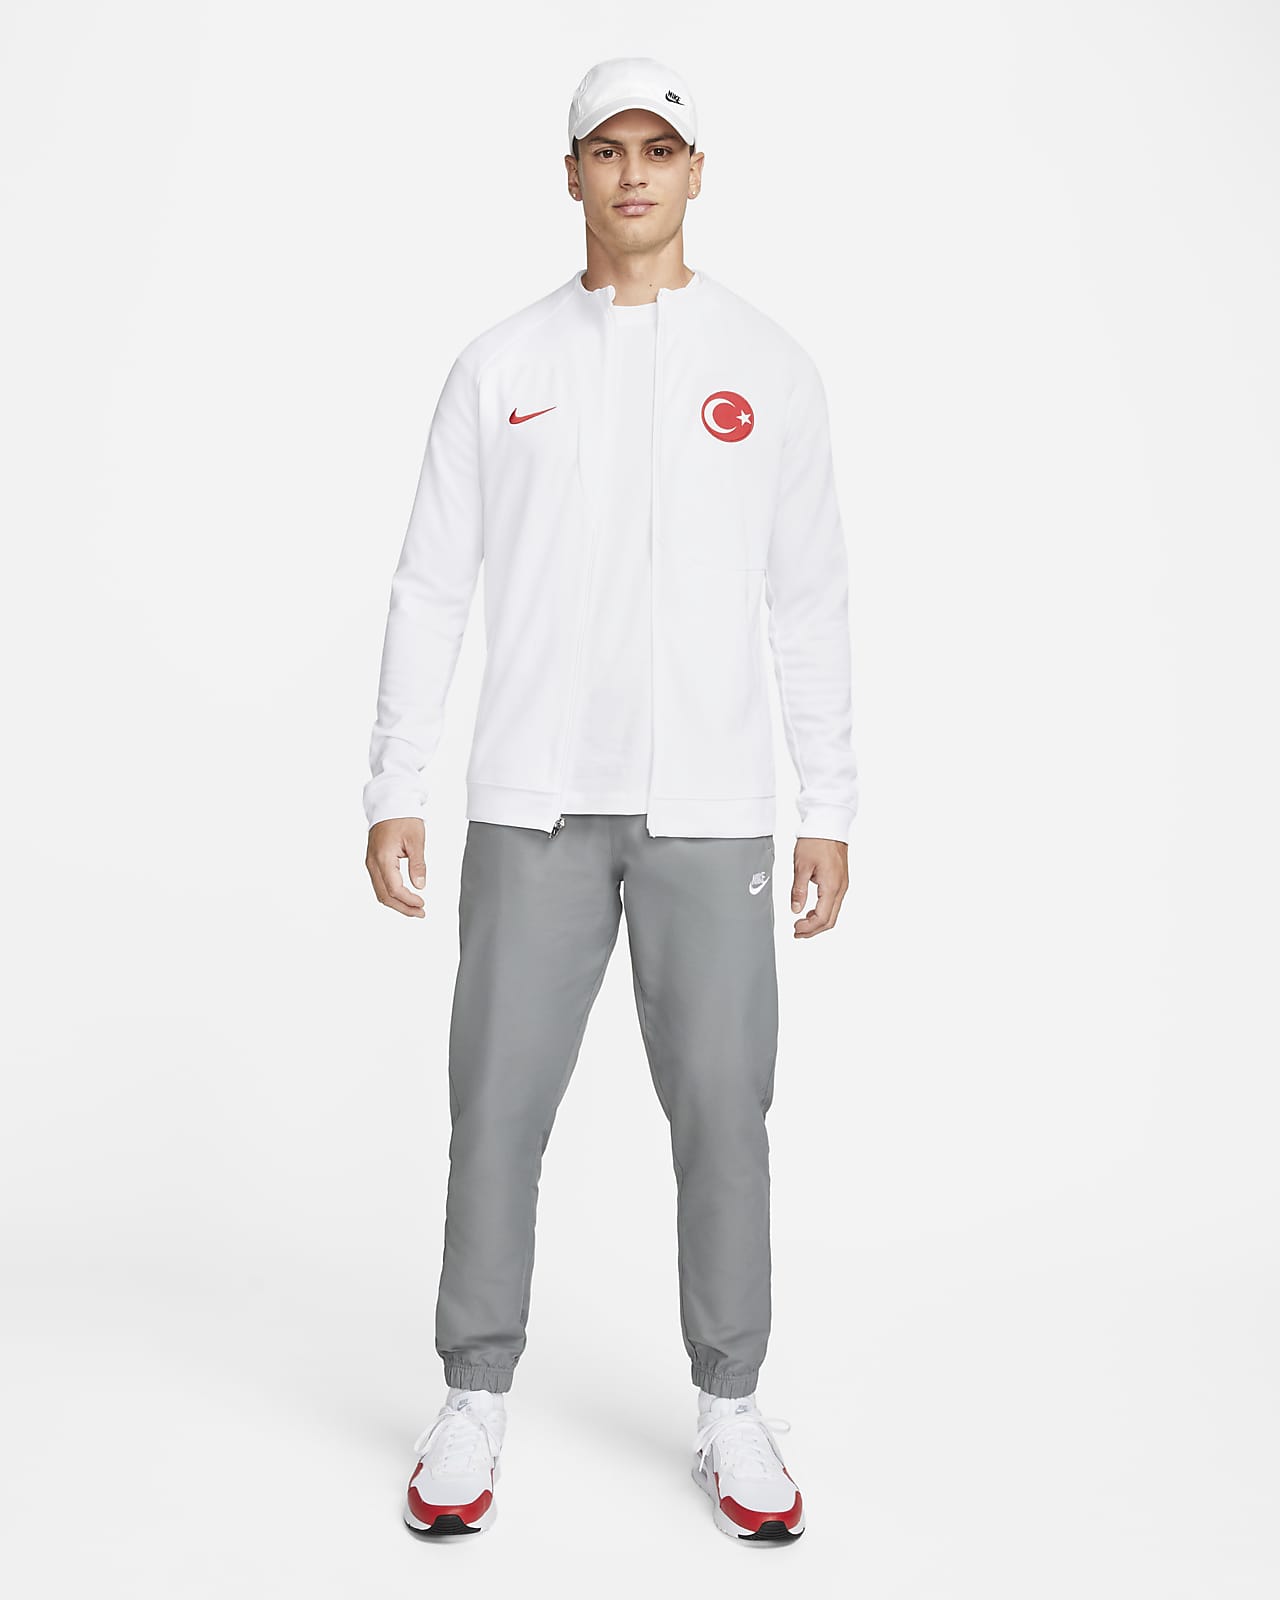 Türkiye Academy Pro Men's Knit Football Jacket. Nike SA